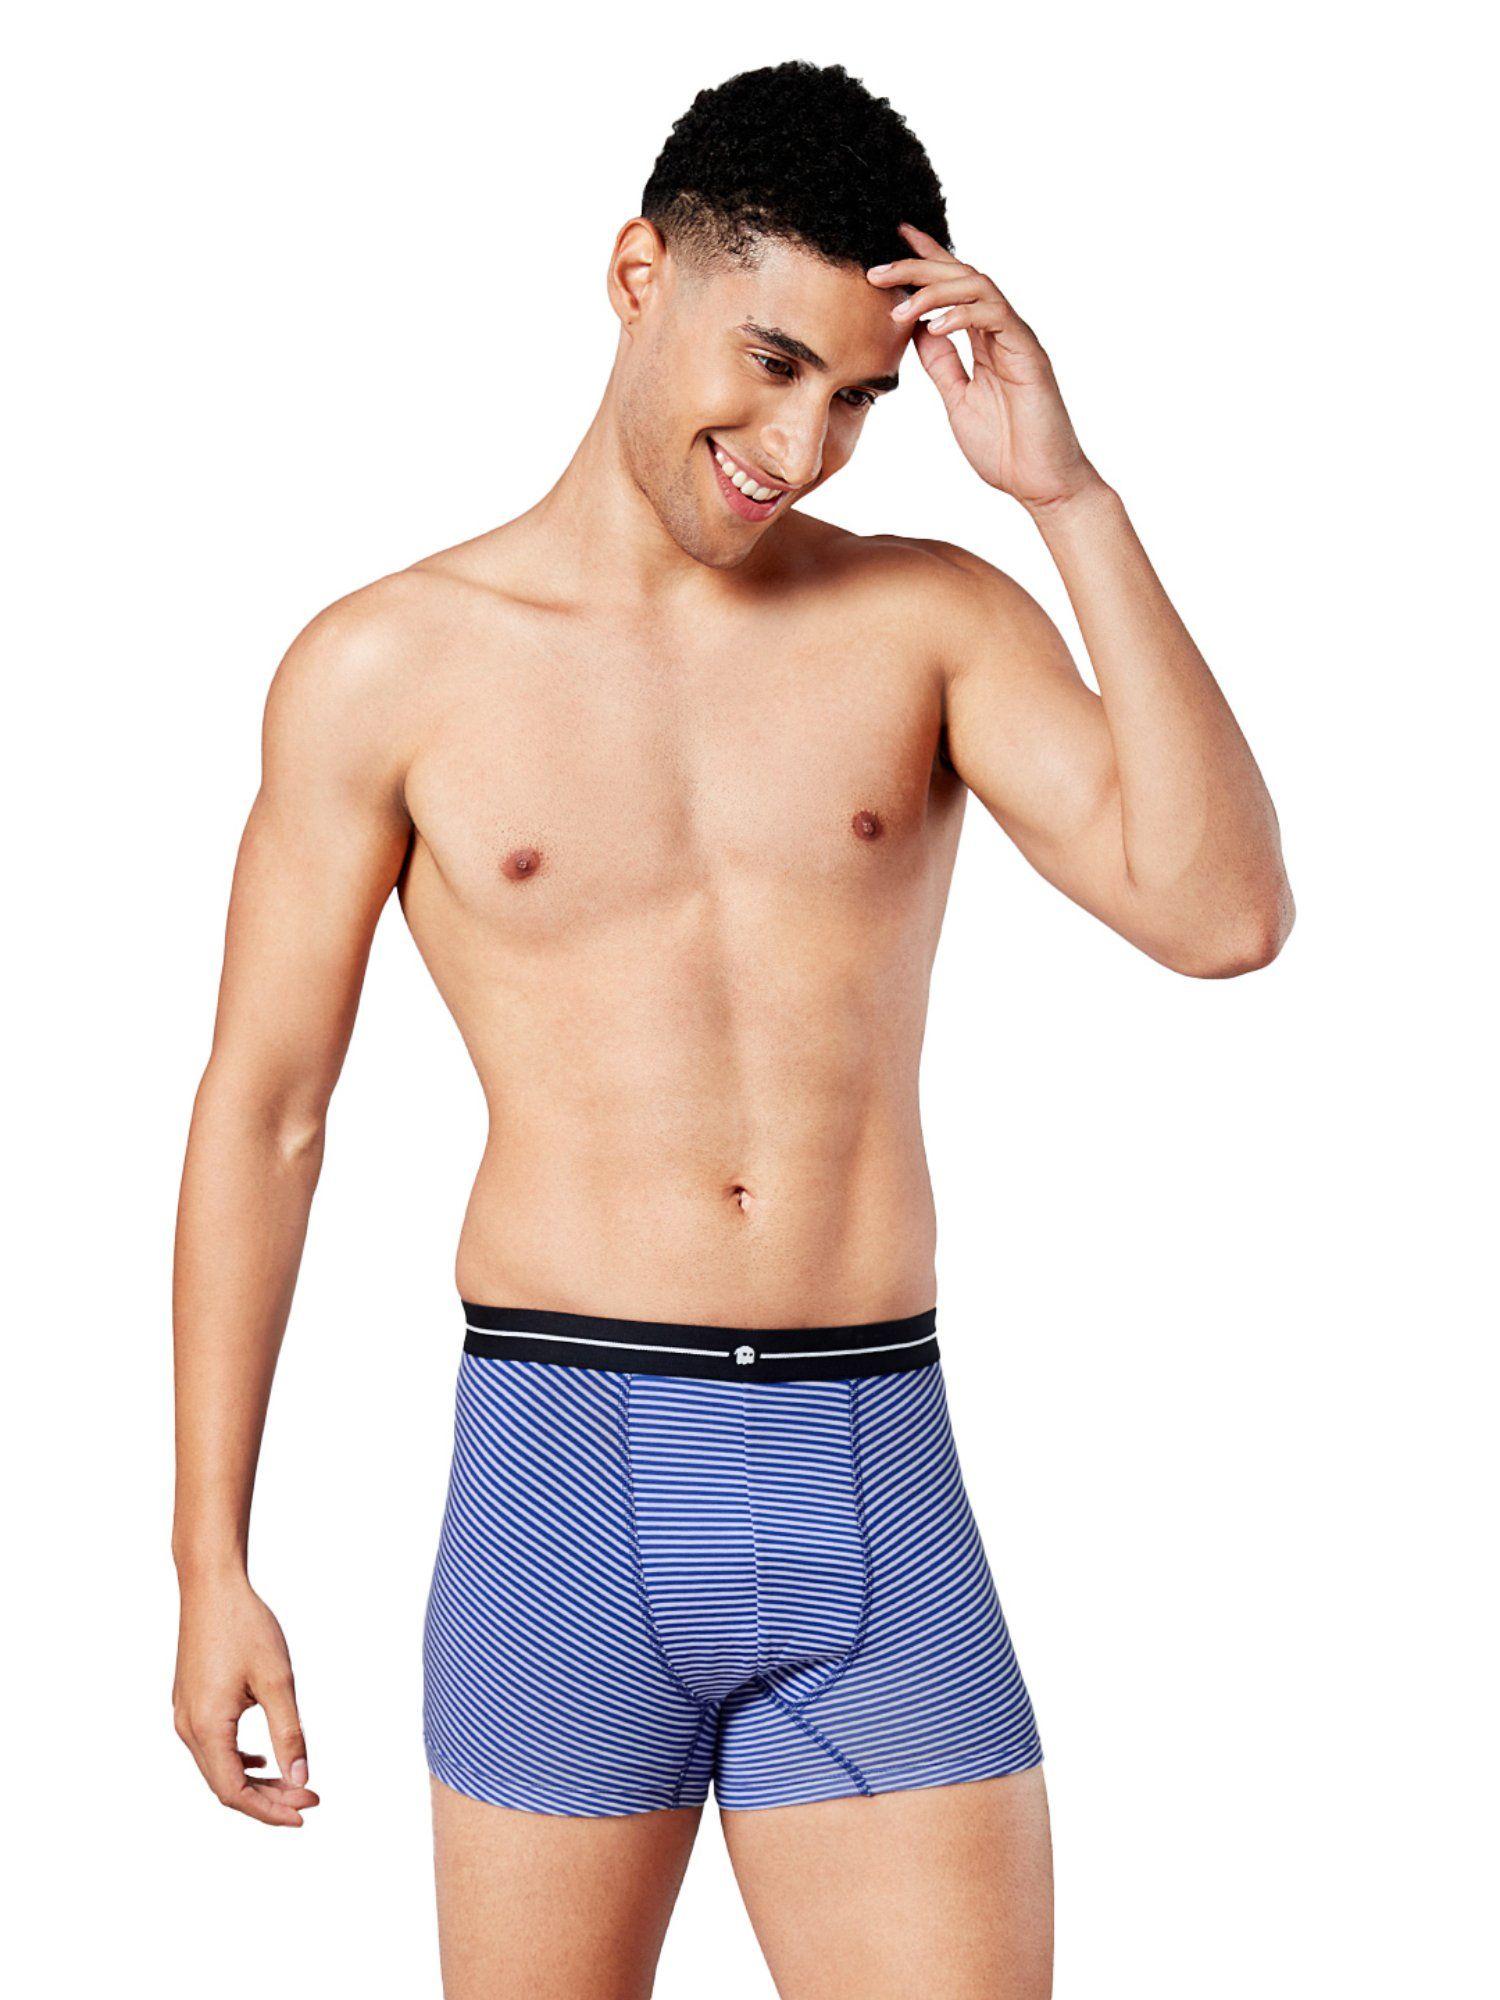 sailor stripes trunks underwear for men blue